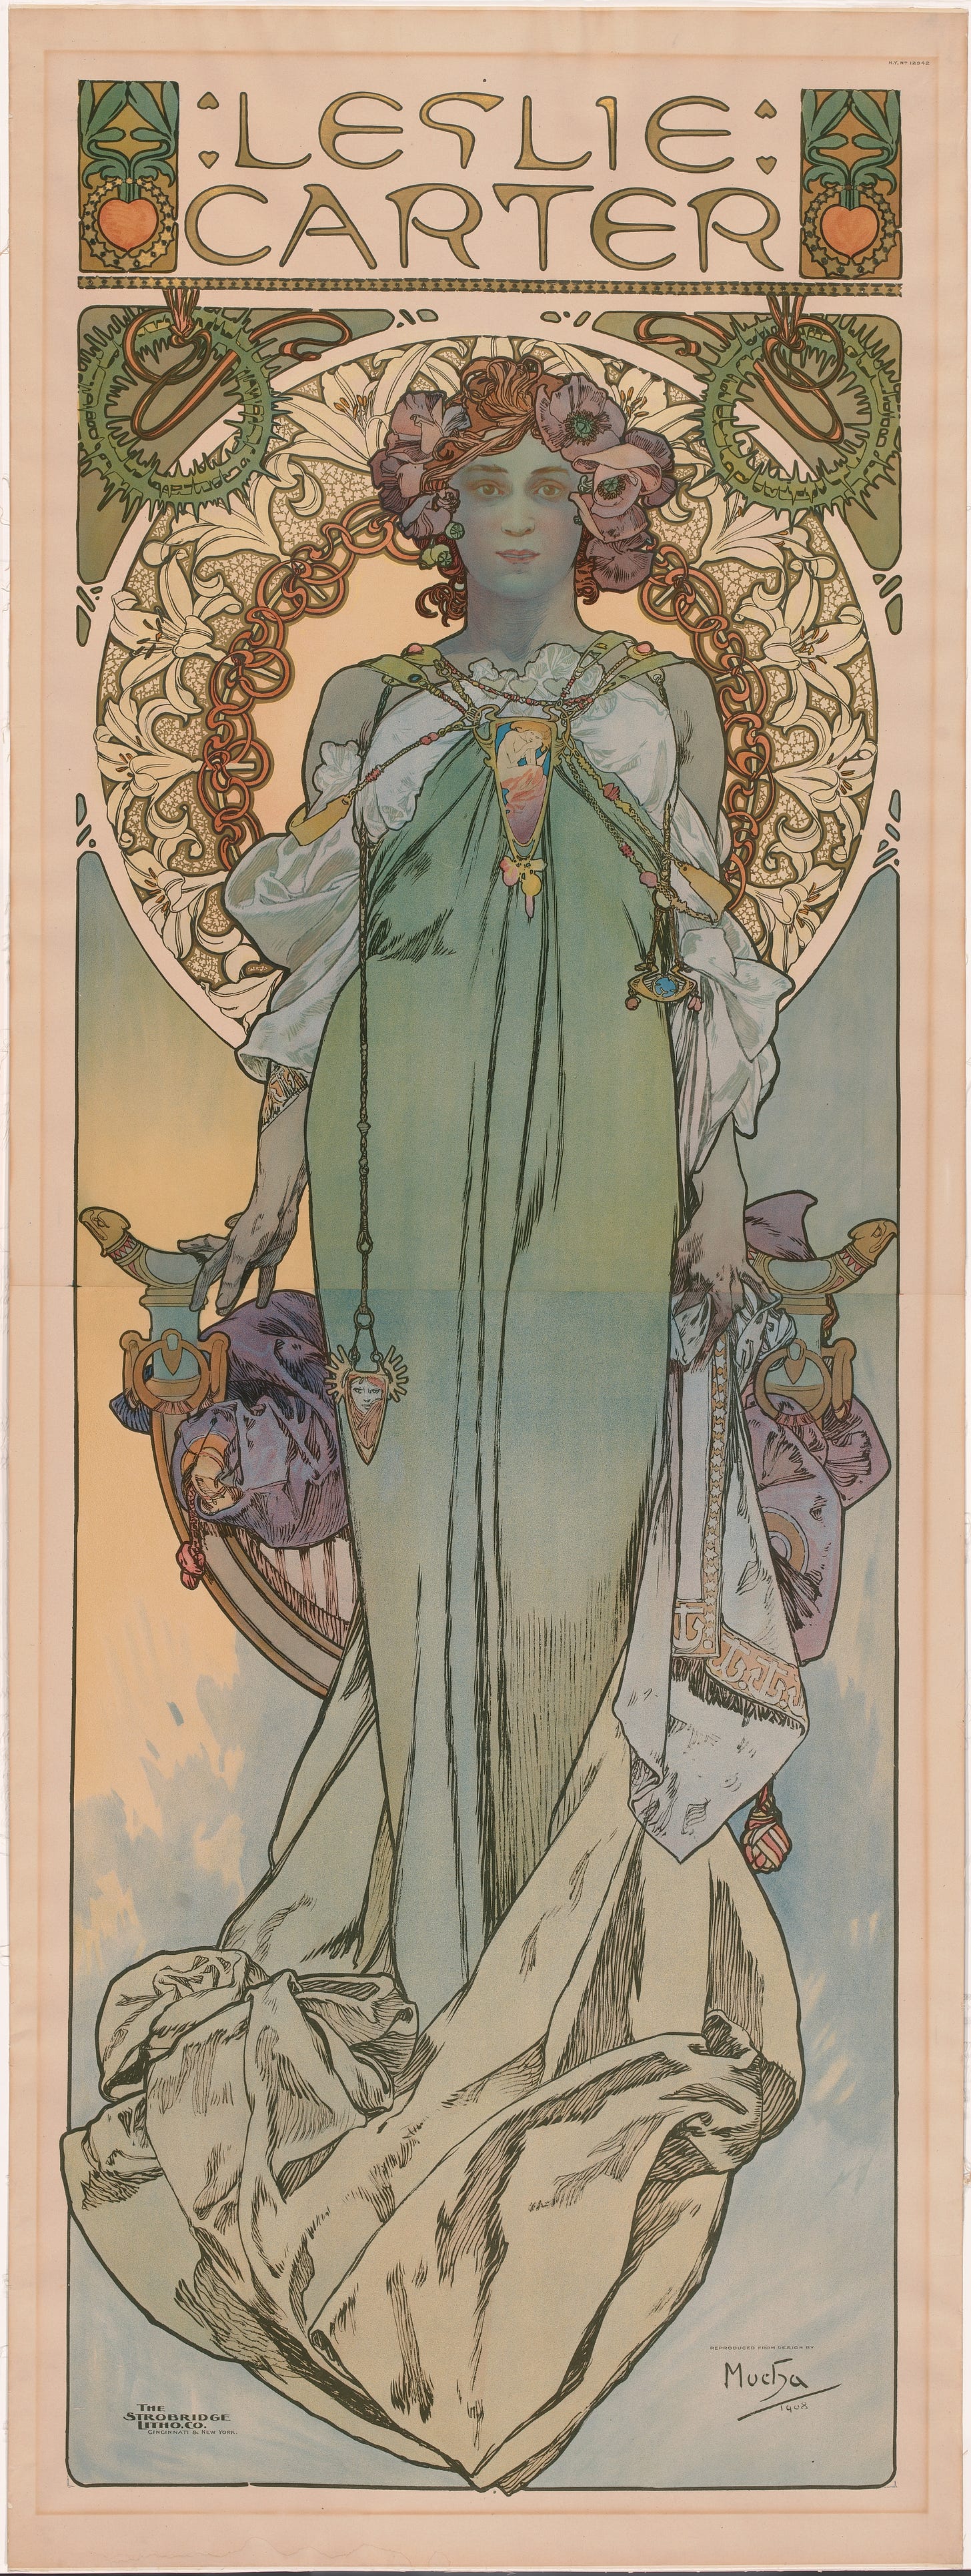 Leslie Carter (1908) by Alphonse Mucha